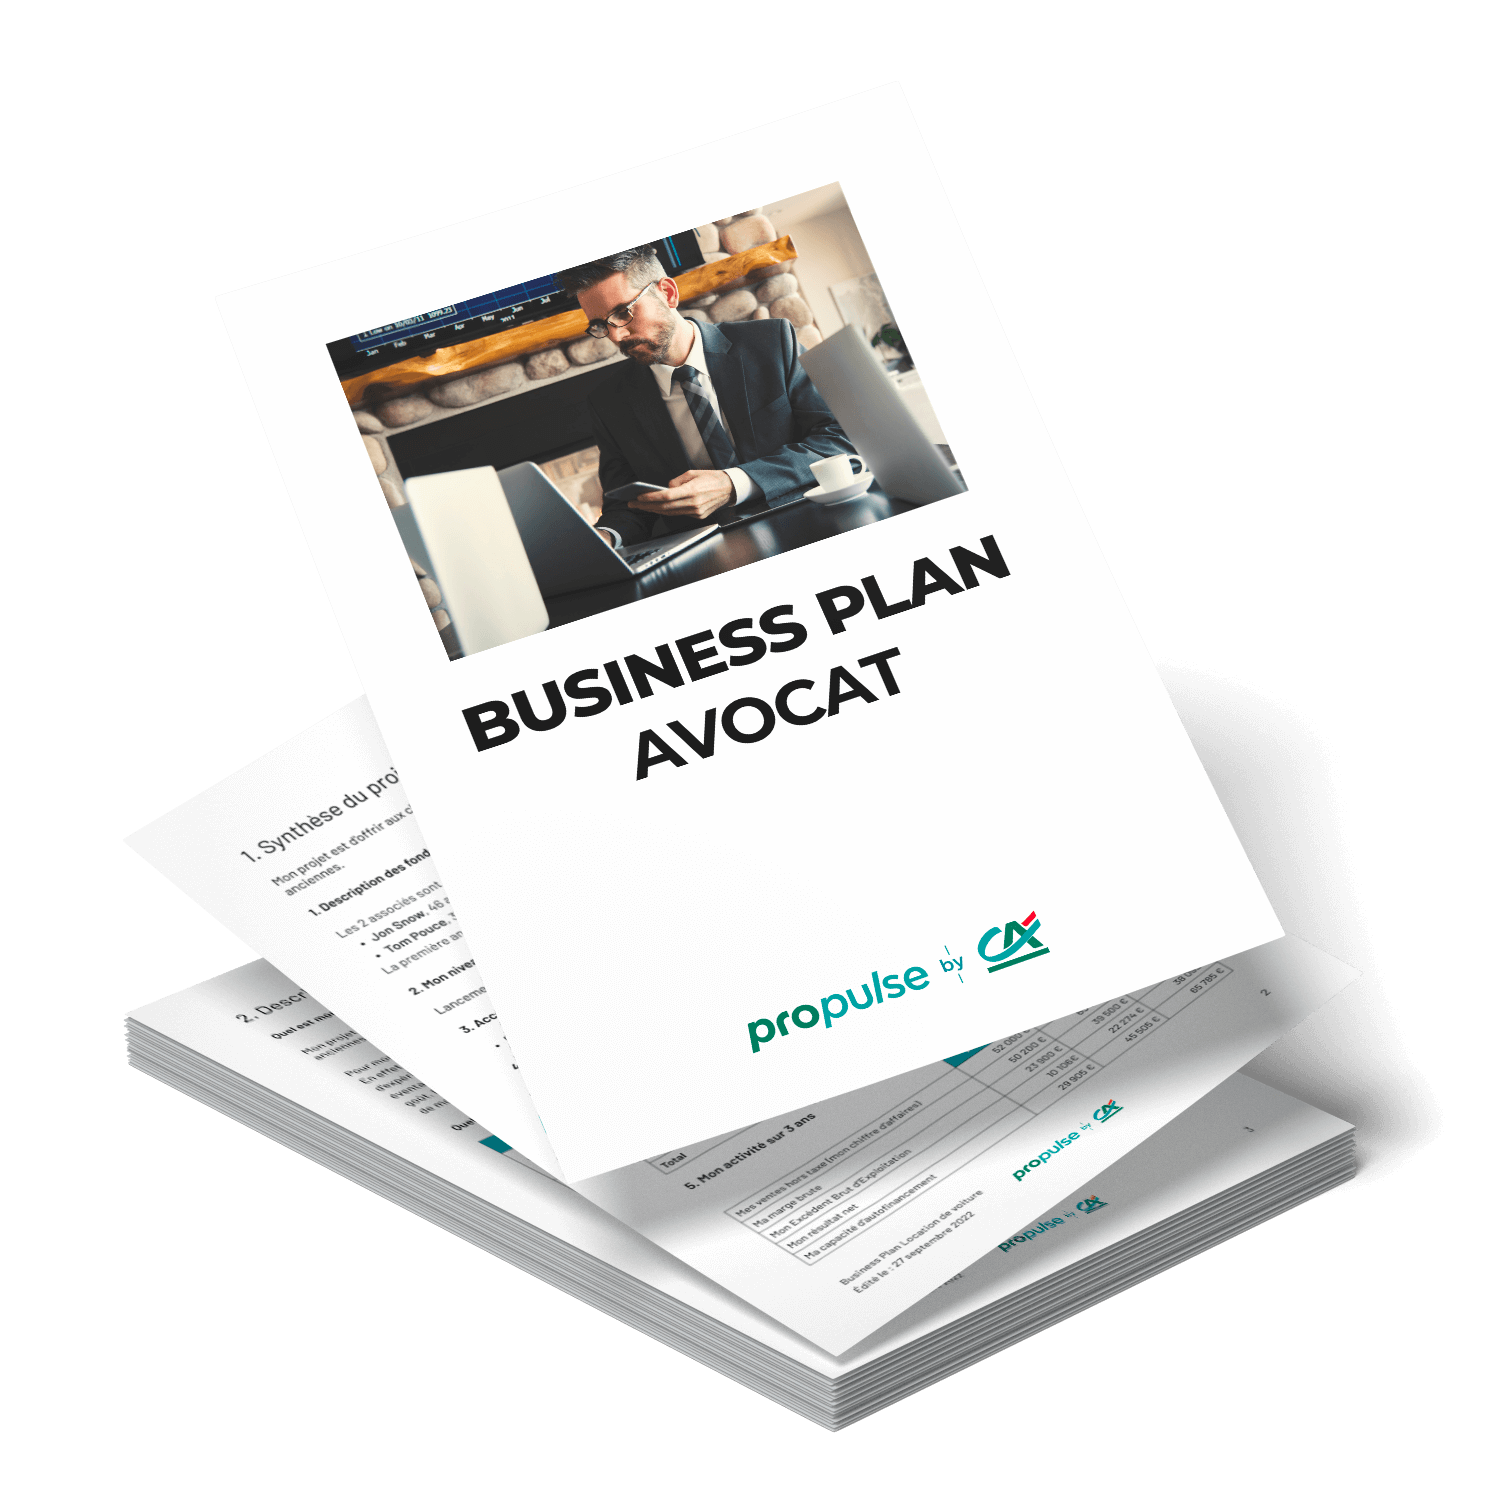 business plan avocat